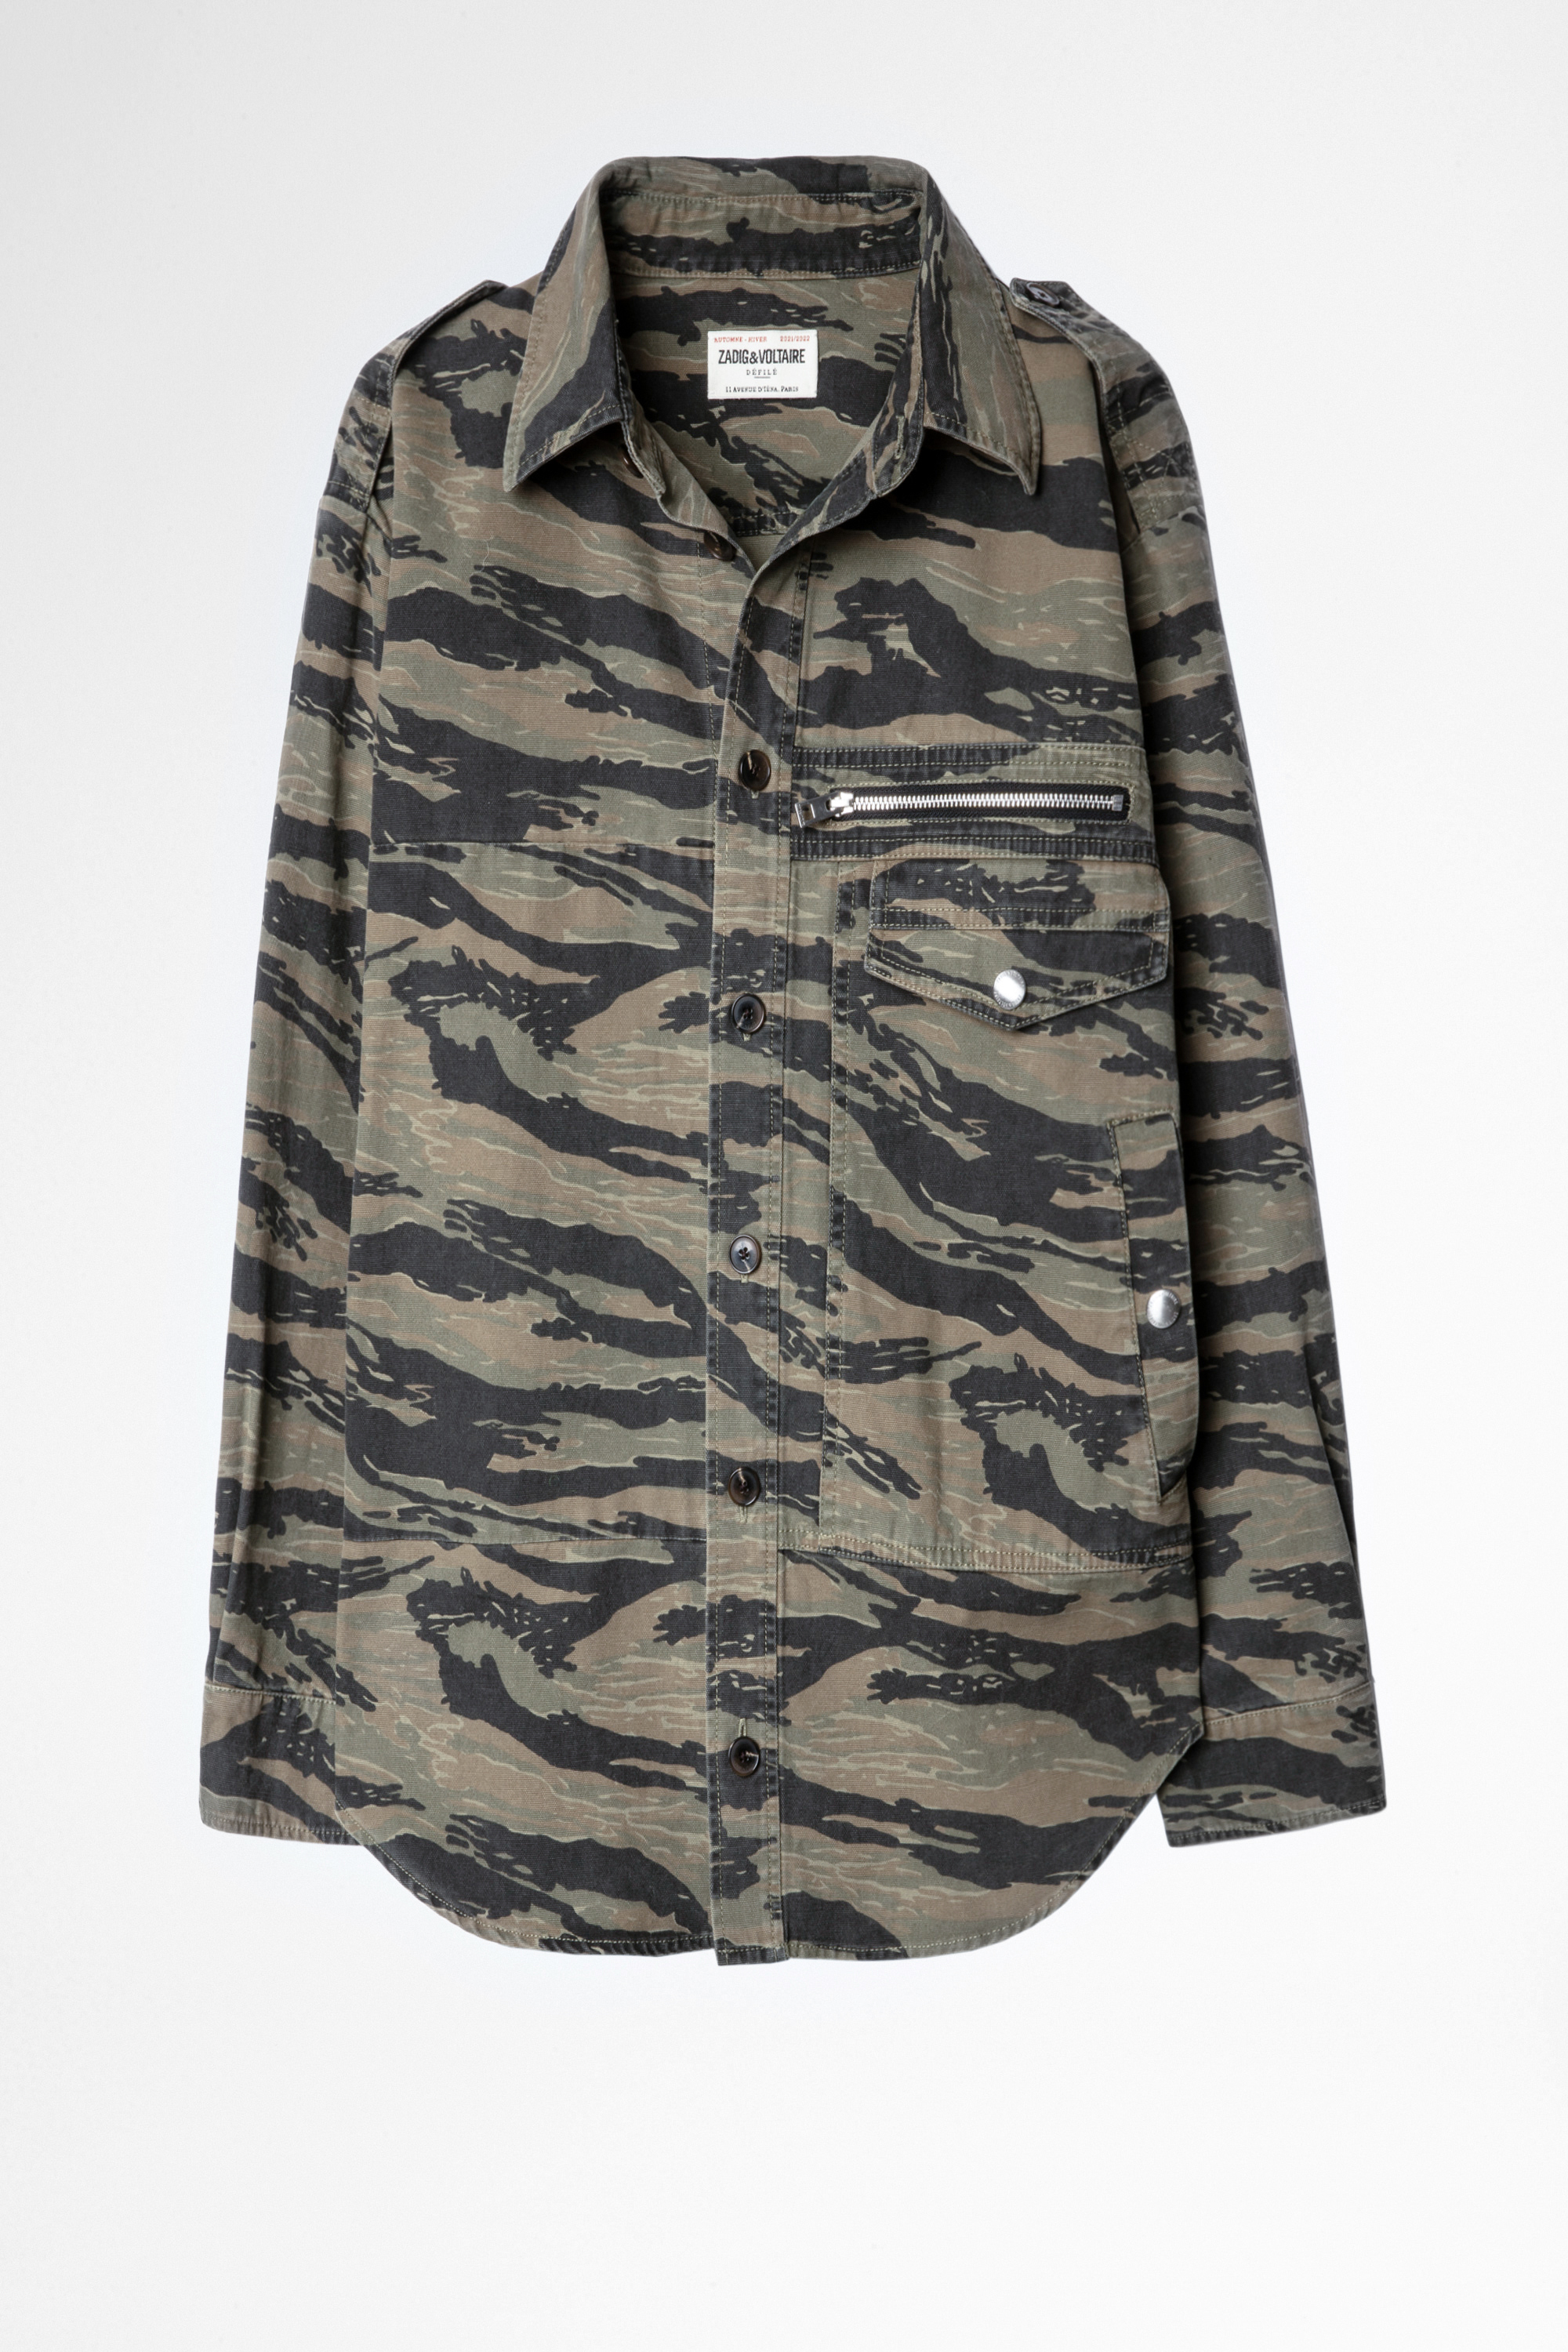 Troy Camou Military Shirt Jacket